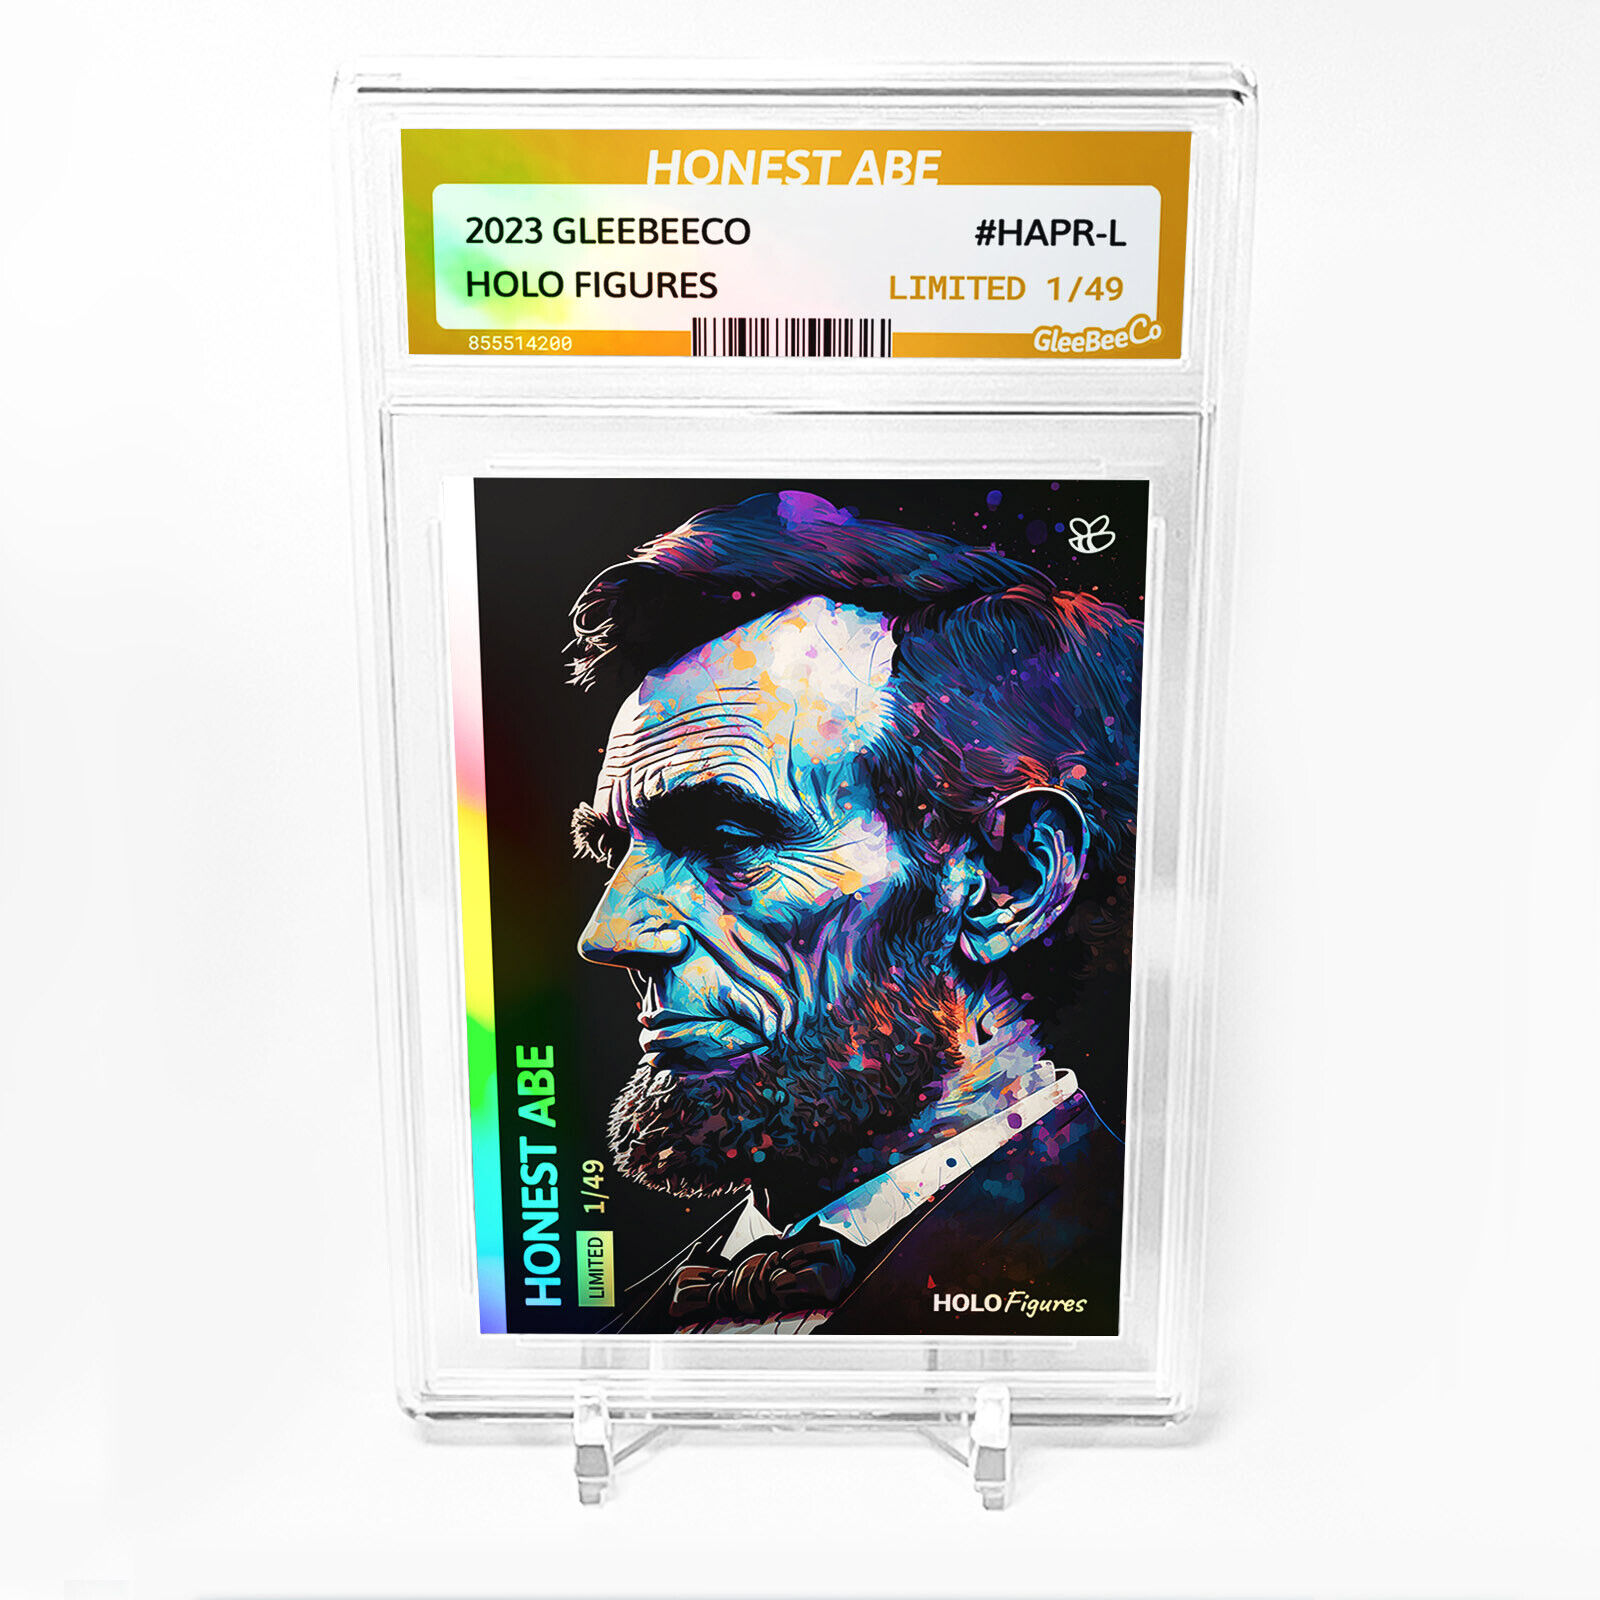 HONEST ABE Lincoln Portrait Art Card 2023 GleeBeeCo Holo Figures #HAPR-L /49